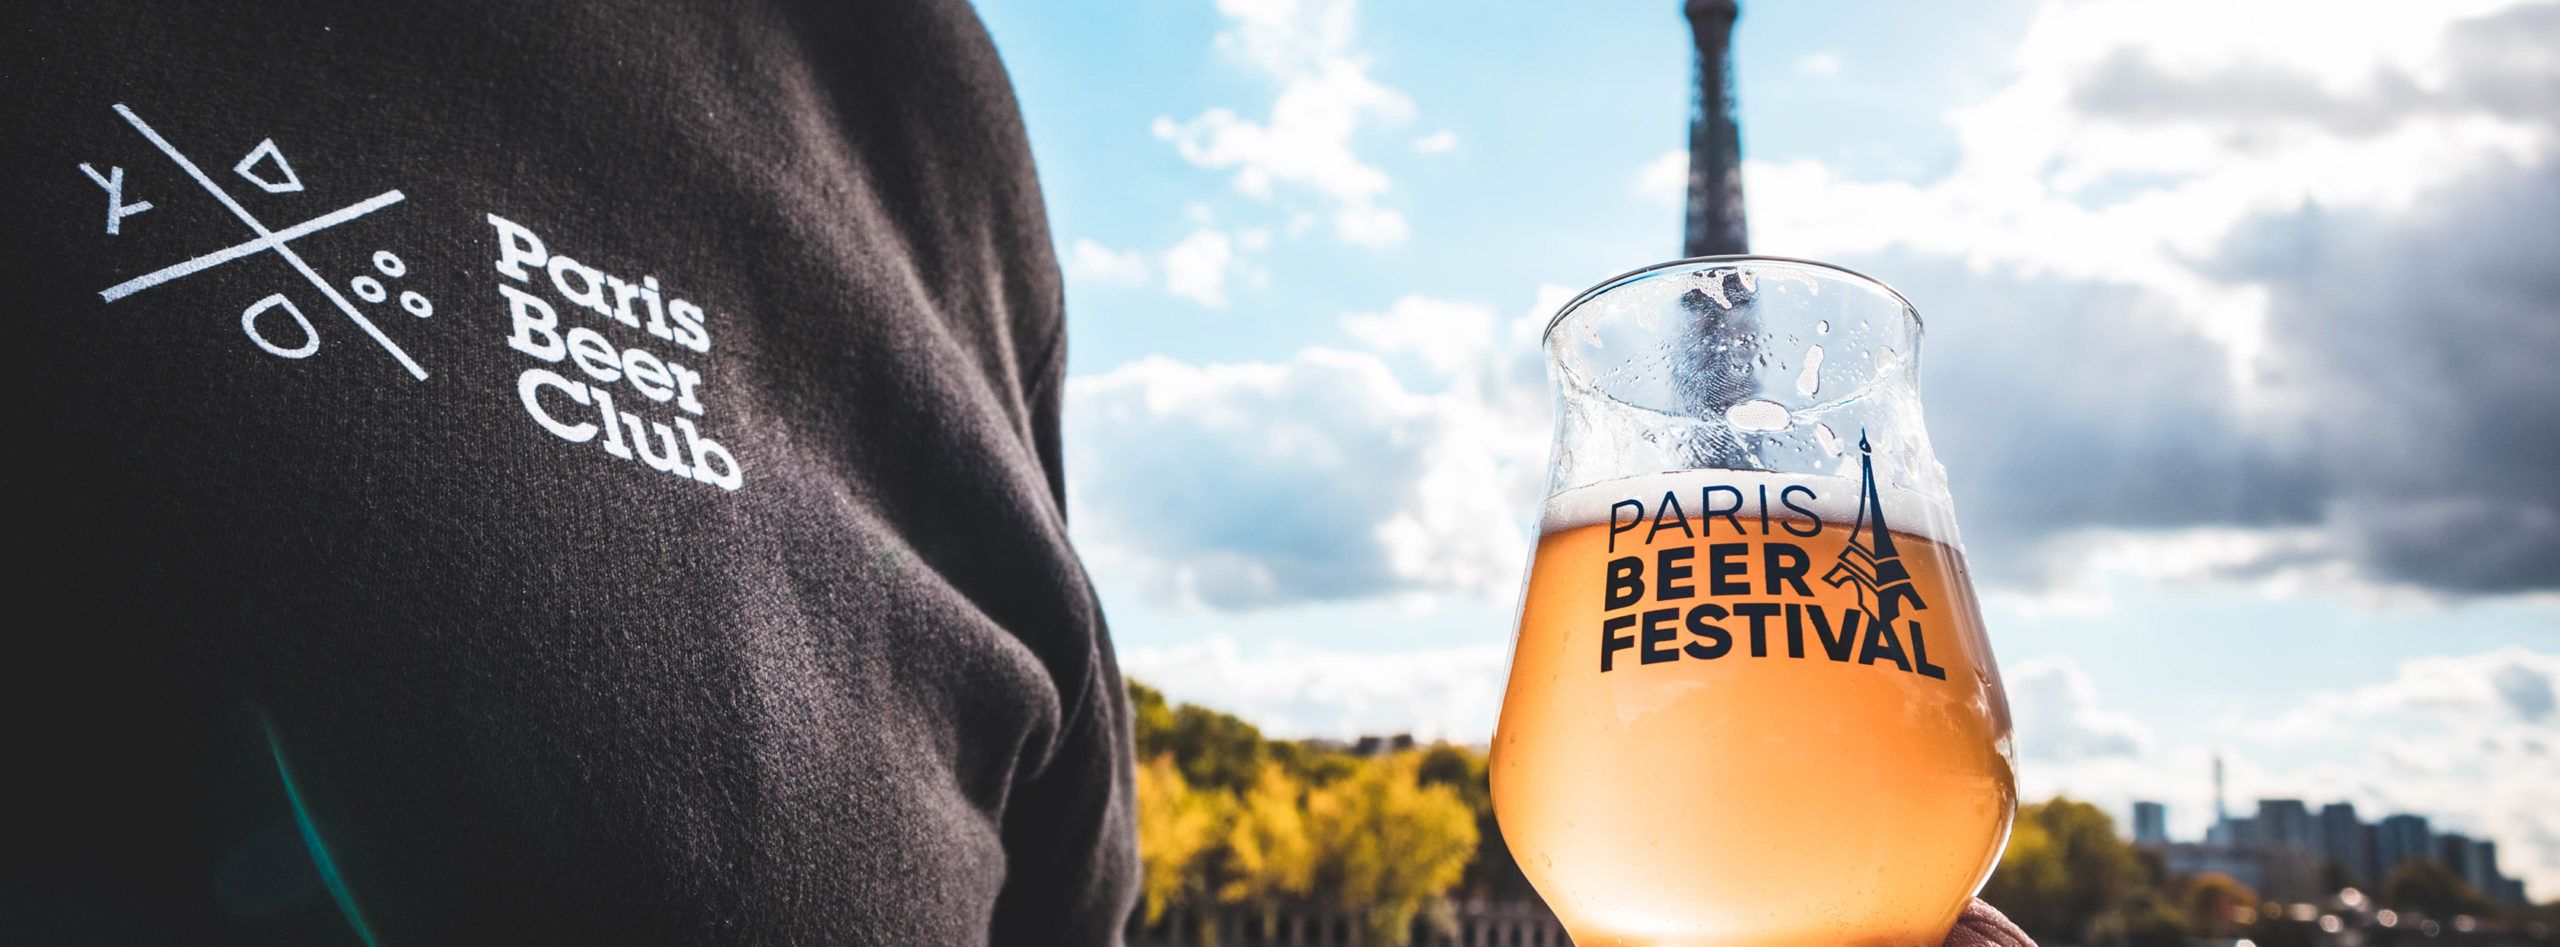 Paris-Beer-Festival